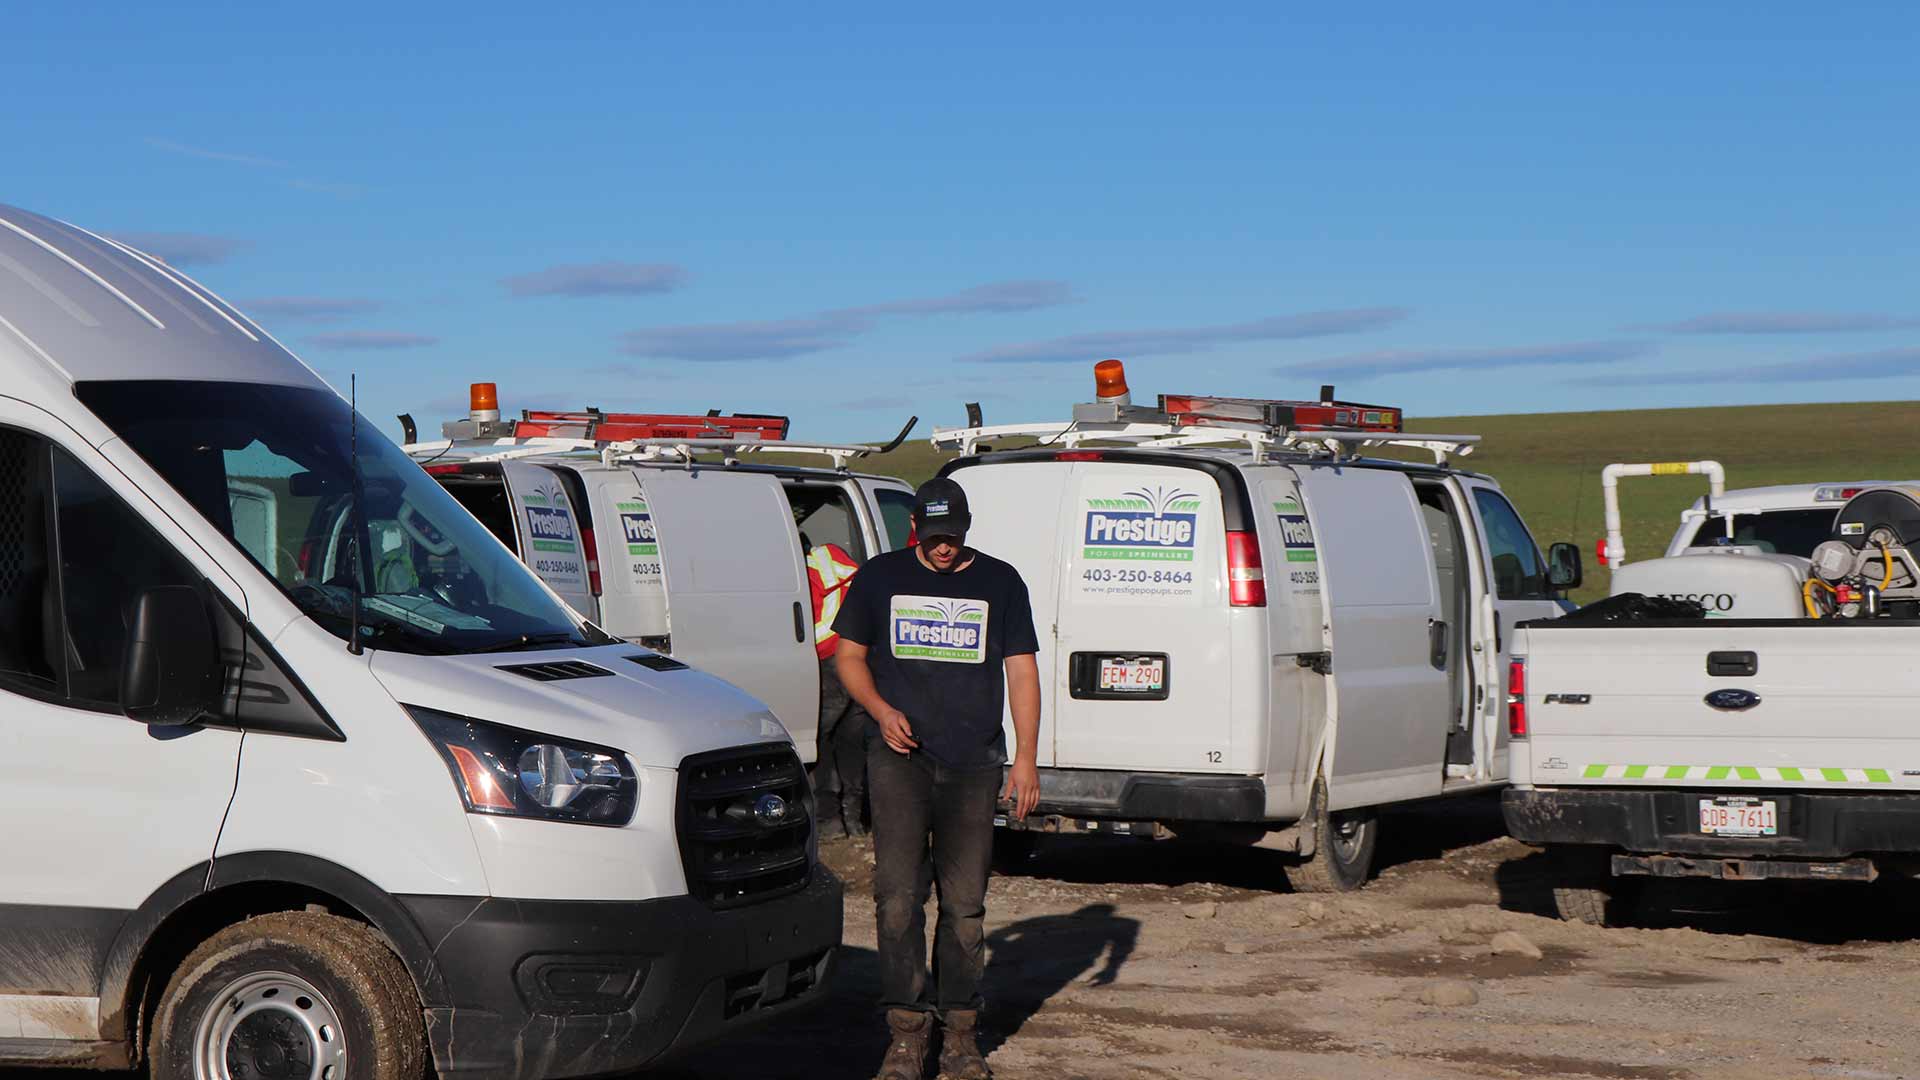 Prestige Outdoor Services work fleet preparing for a job in Airdrie, Alberta.